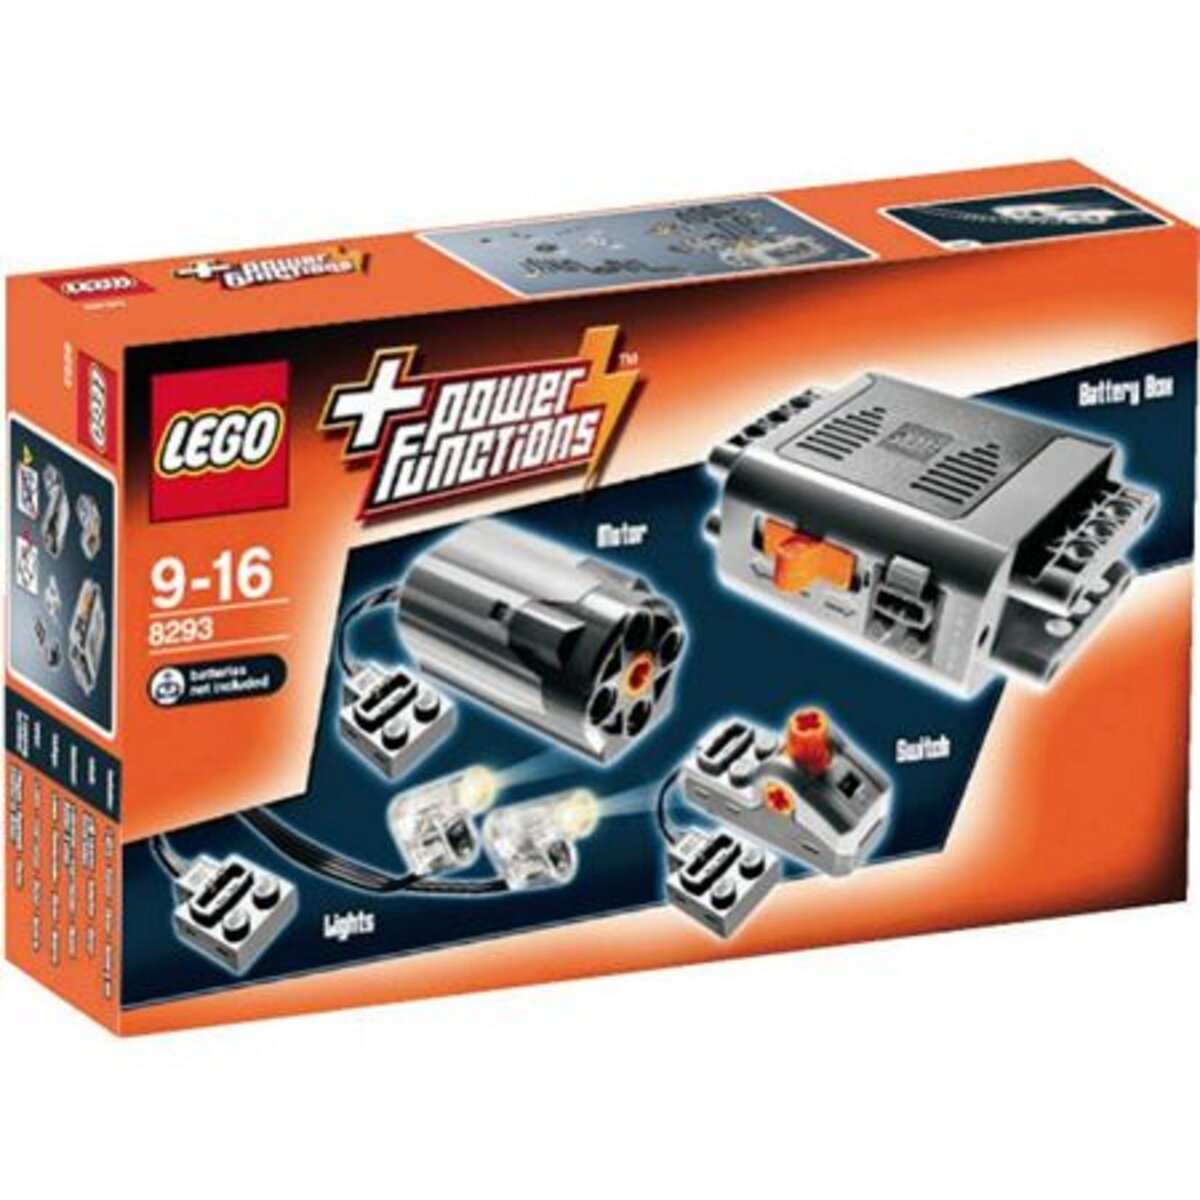 LEGO Technic 8293 - Ensemble Power Functions